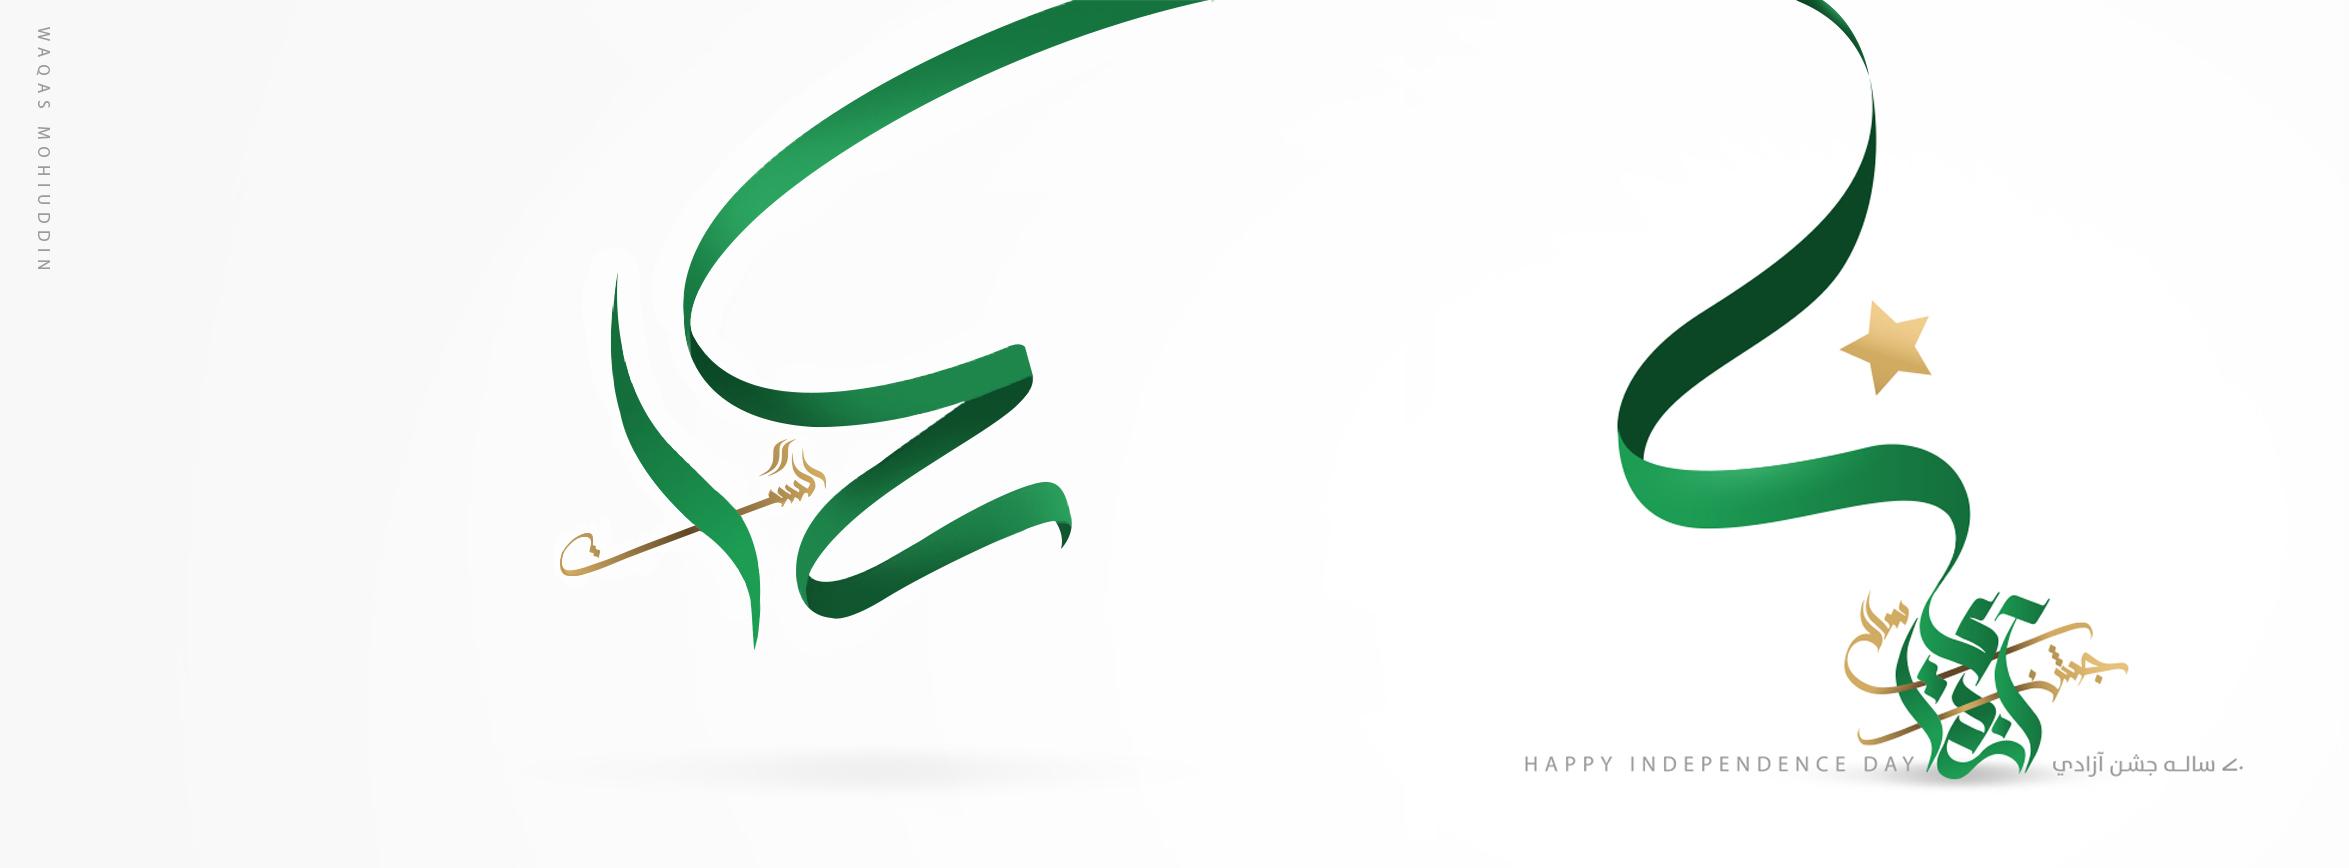 Independence Logo - Pakistan's 70 Years Independence Logo Designs